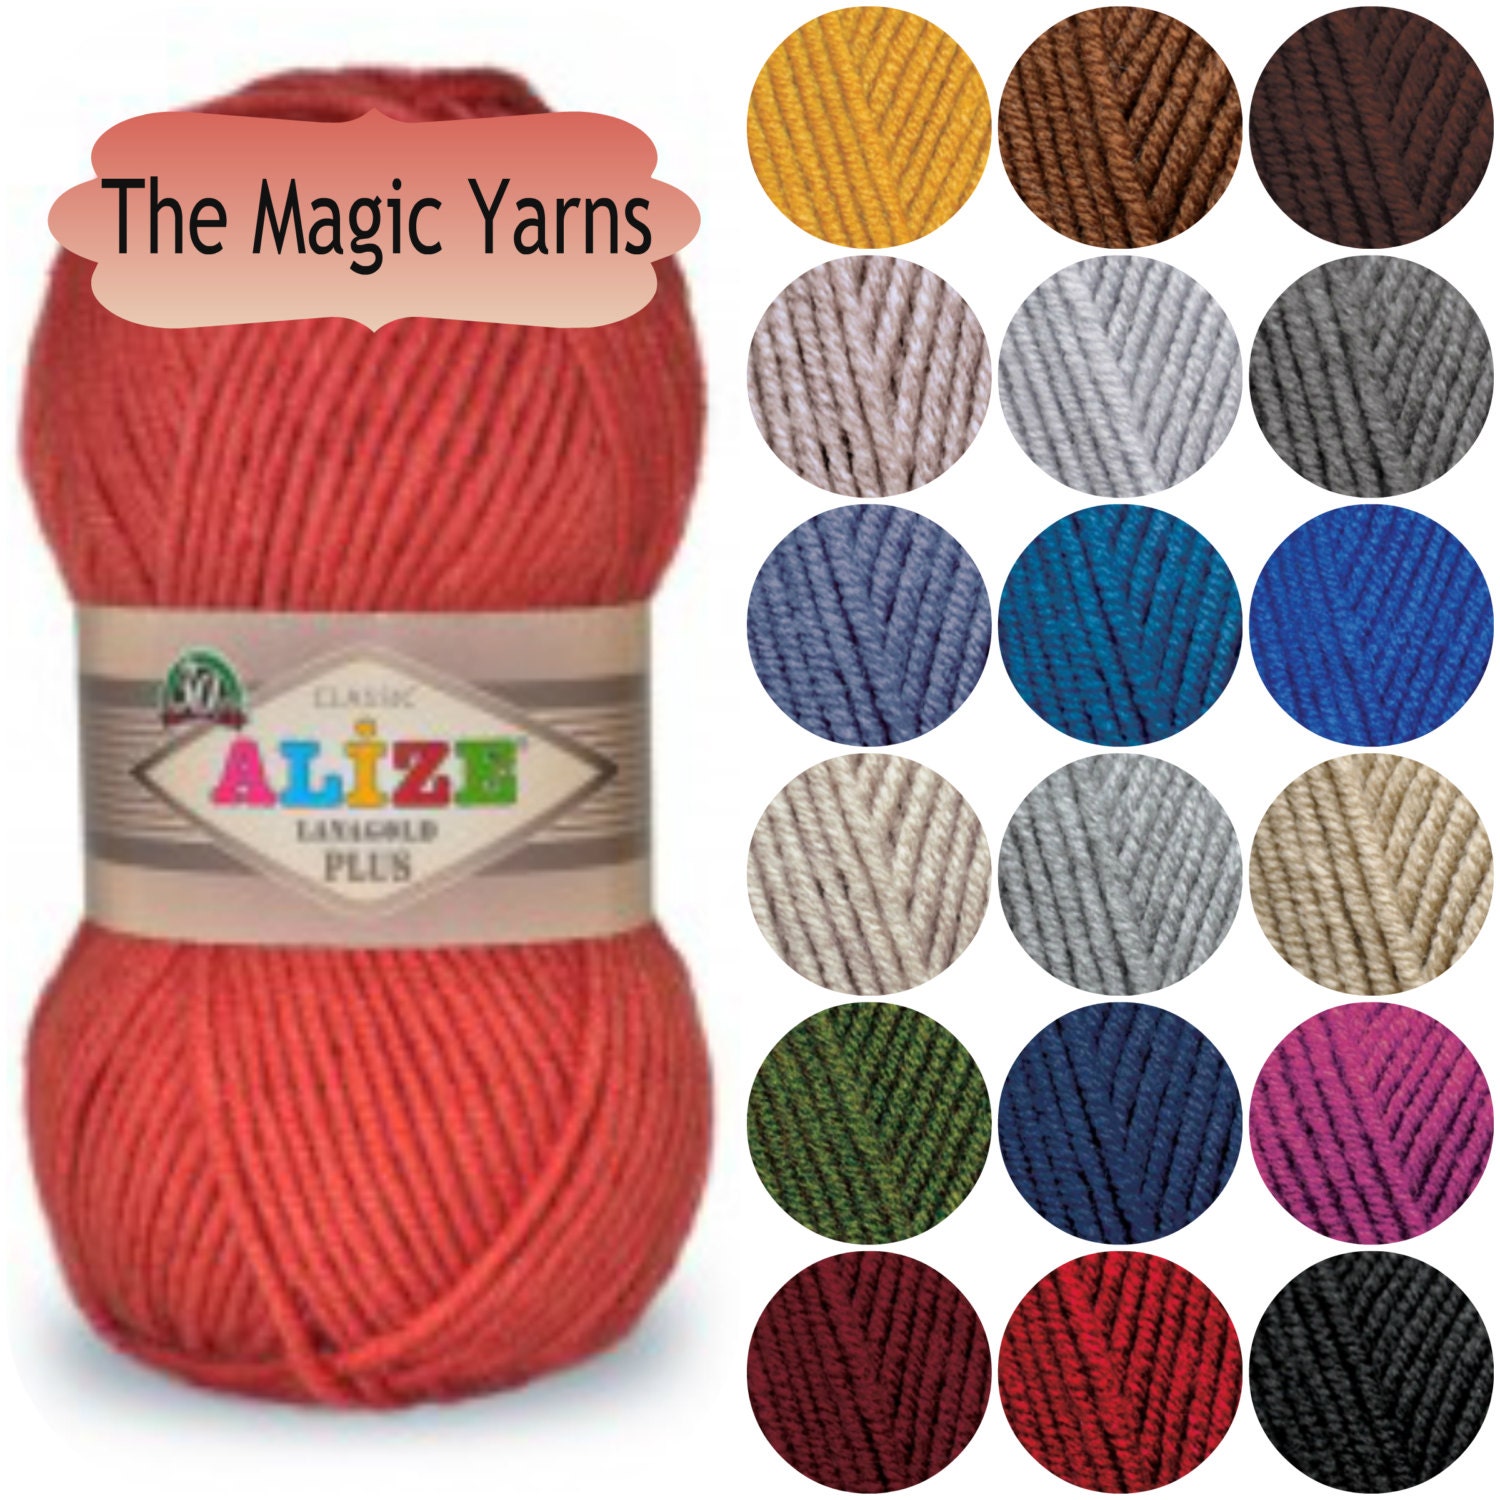 Alize Lanagold Plus - Yarn, Wool Blend, Aran, Worsted Weight Knitting Crochet Yarn